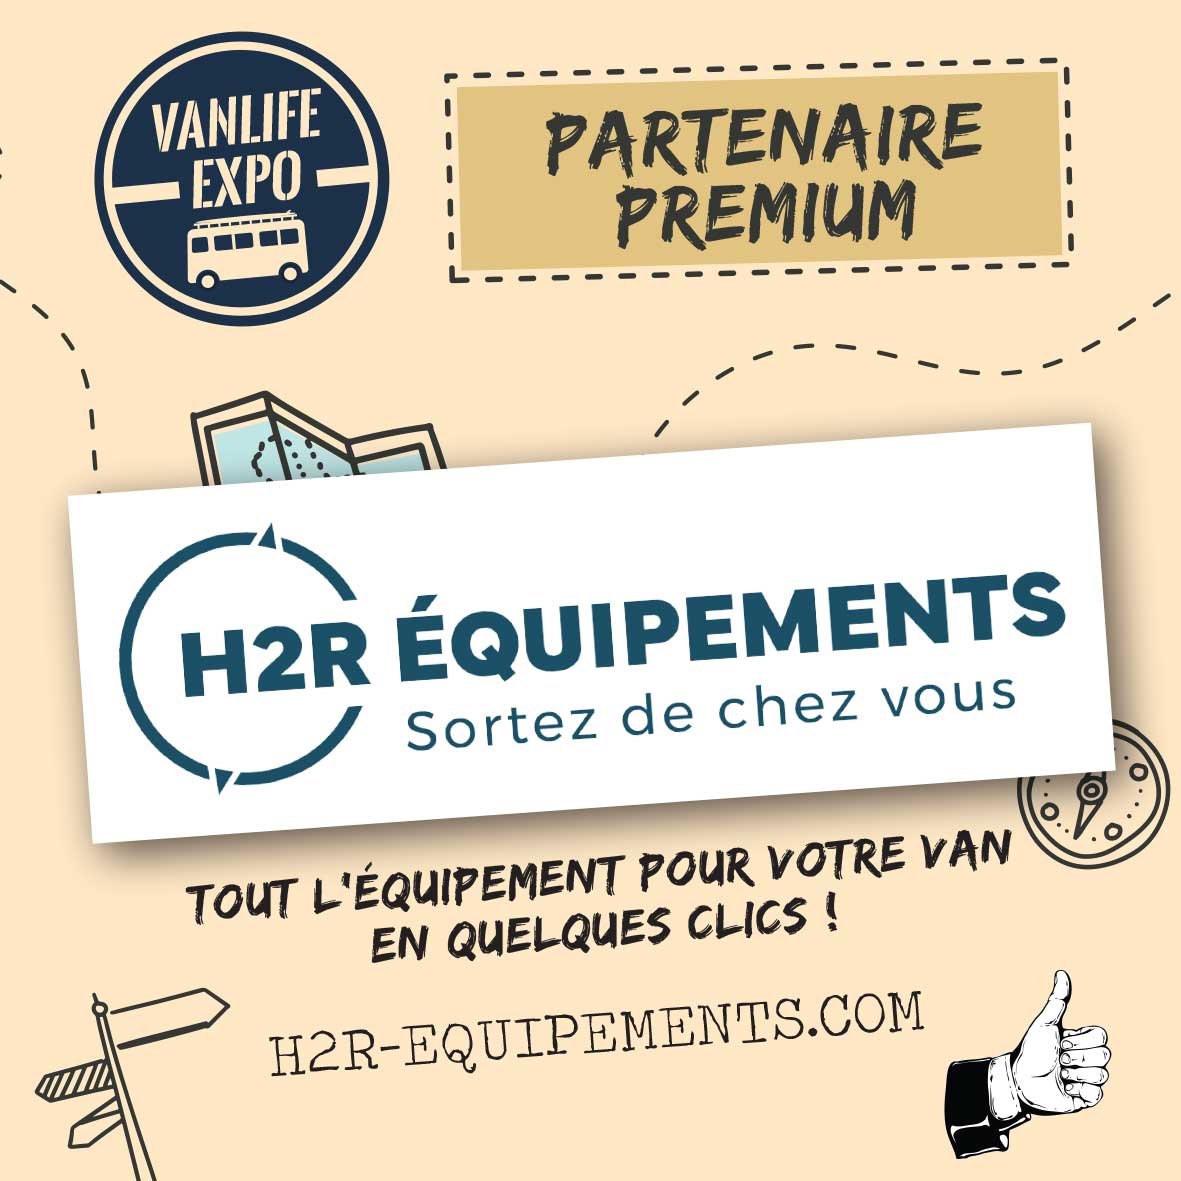 Featured image for “H2R Equipements<br>Partenaire Premium”